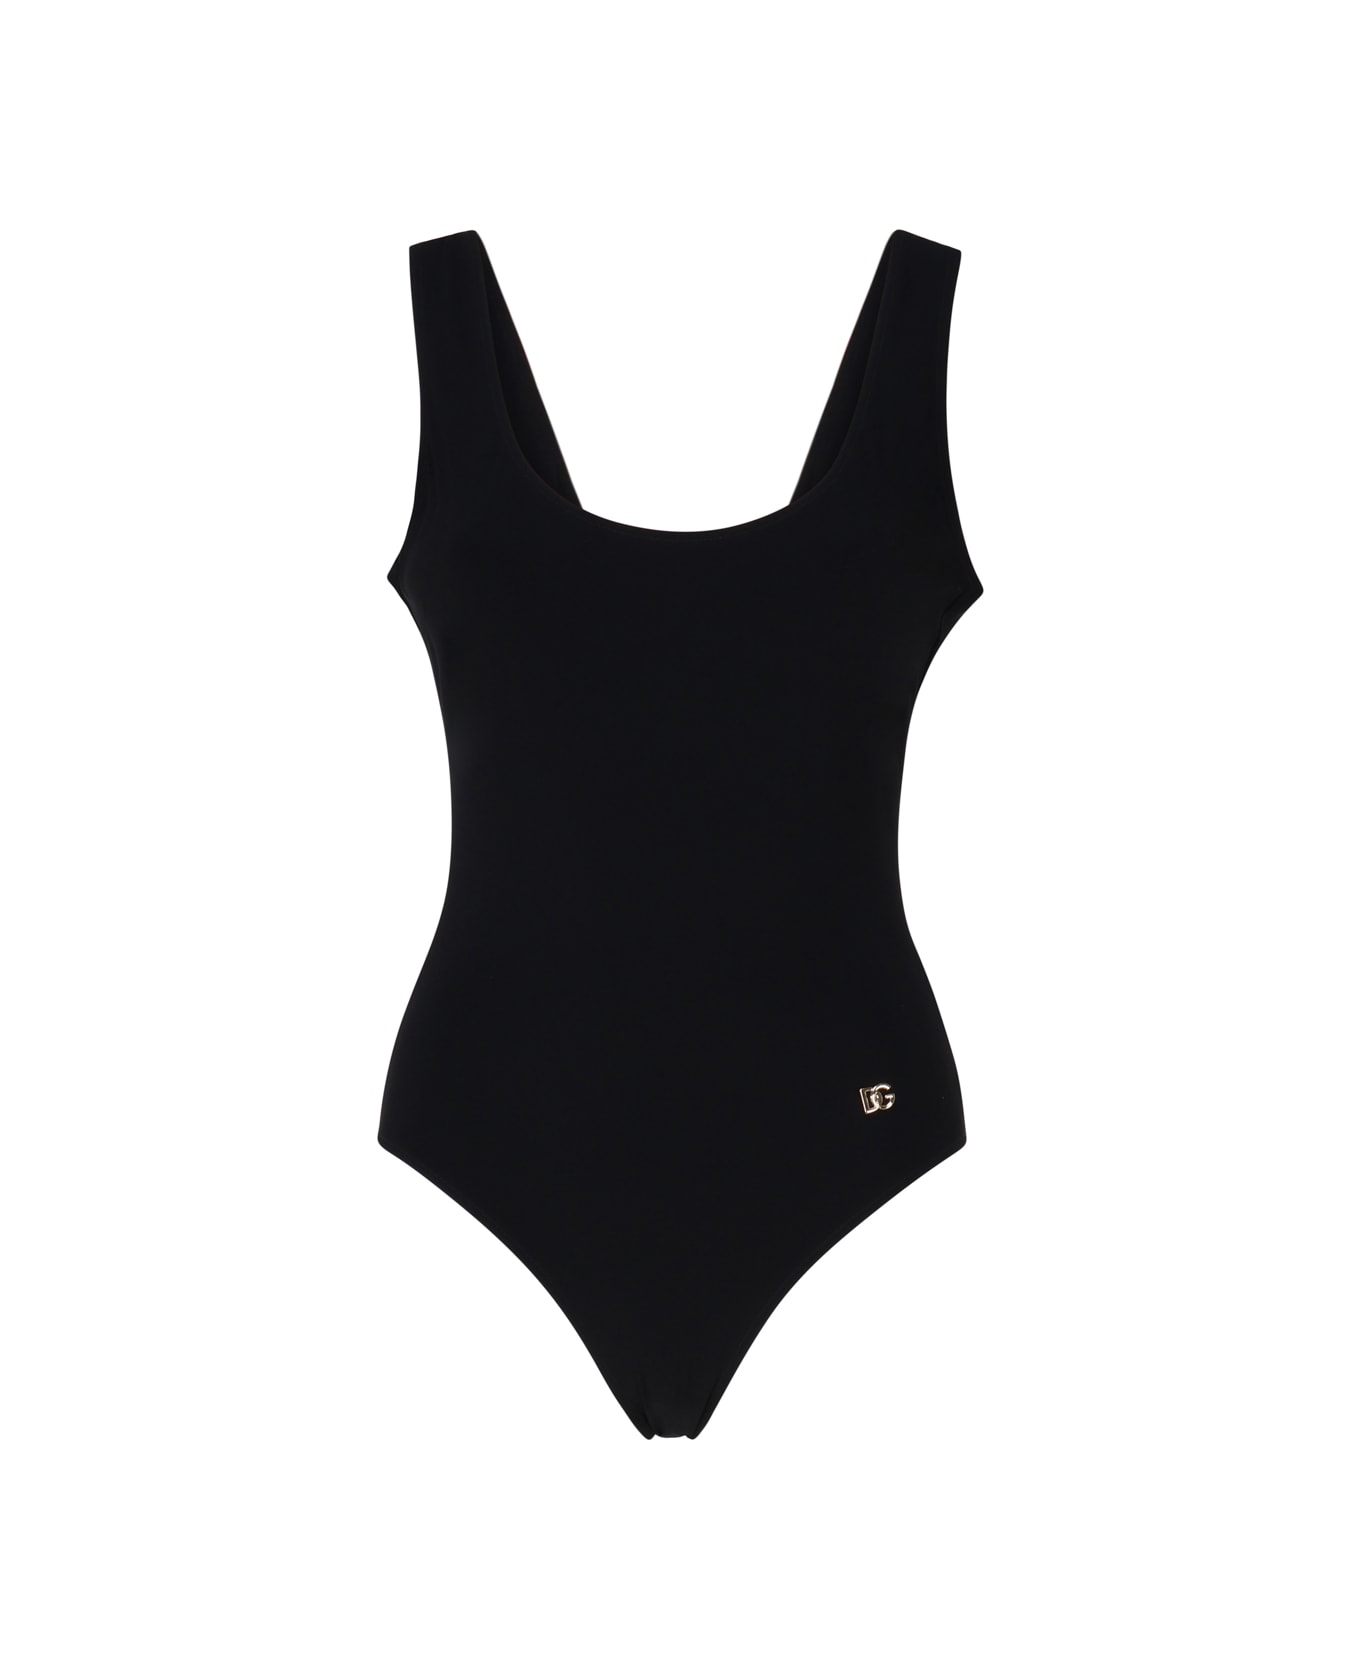 Dolce & Gabbana Olympic One-piece Swimsuit - Black